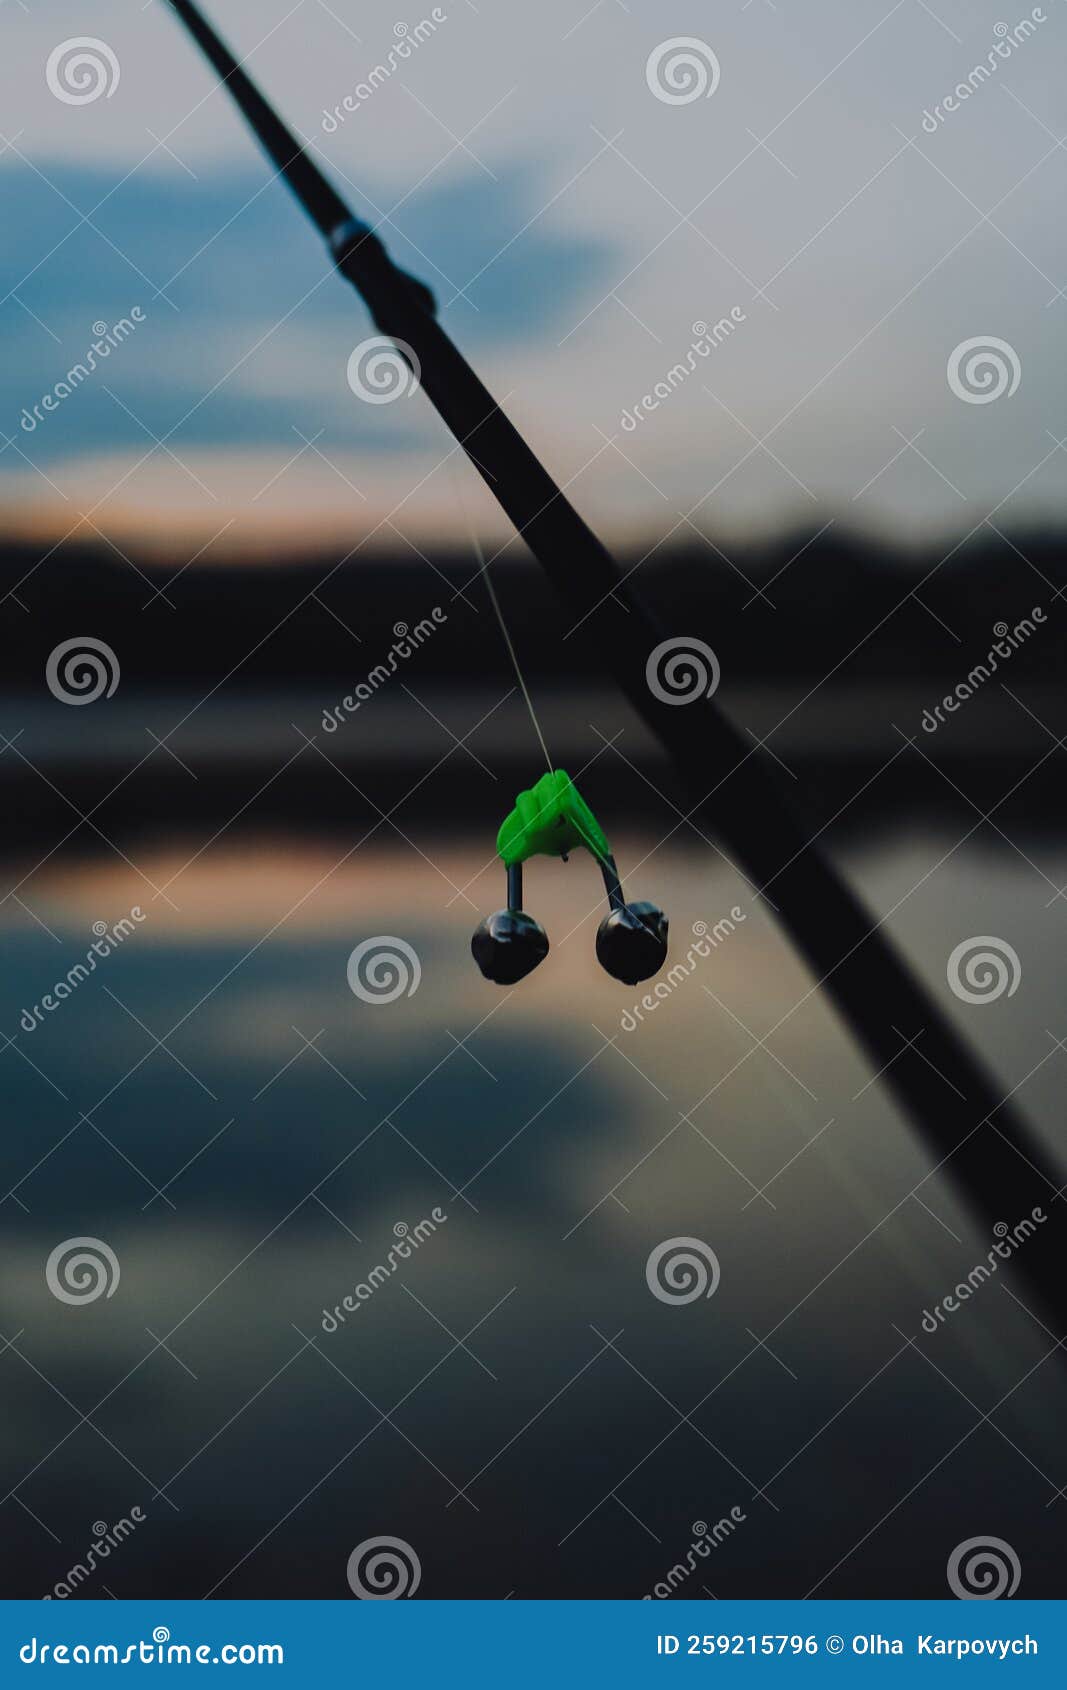 https://thumbs.dreamstime.com/z/sunrise-sunset-fishing-rods-background-lake-sports-bell-hangs-line-selective-focus-259215796.jpg